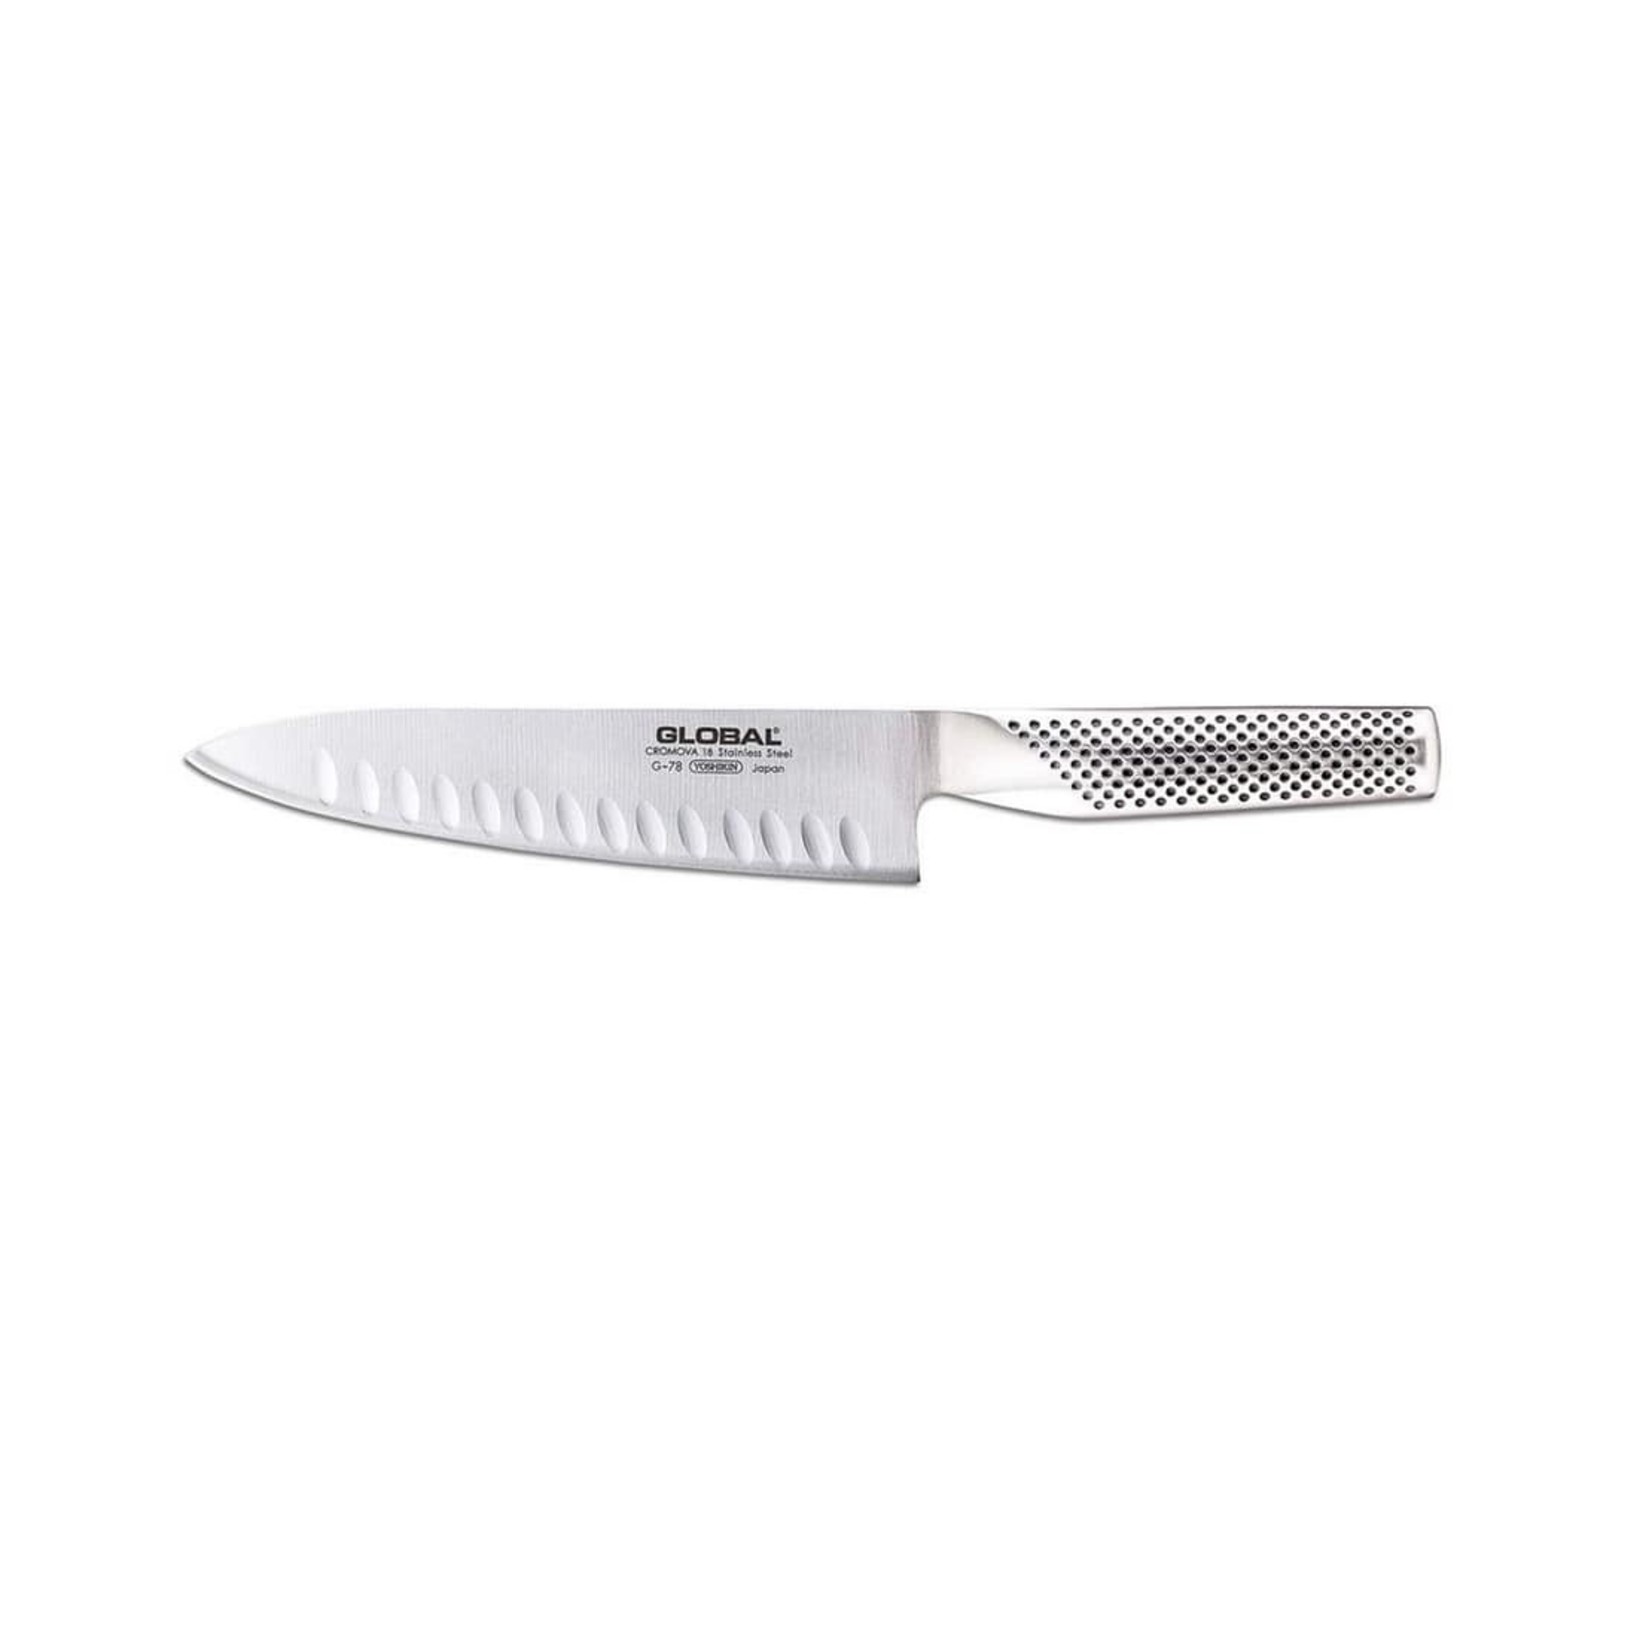 GLOBAL GLOBAL Fluted Chef Knife G78 18cm